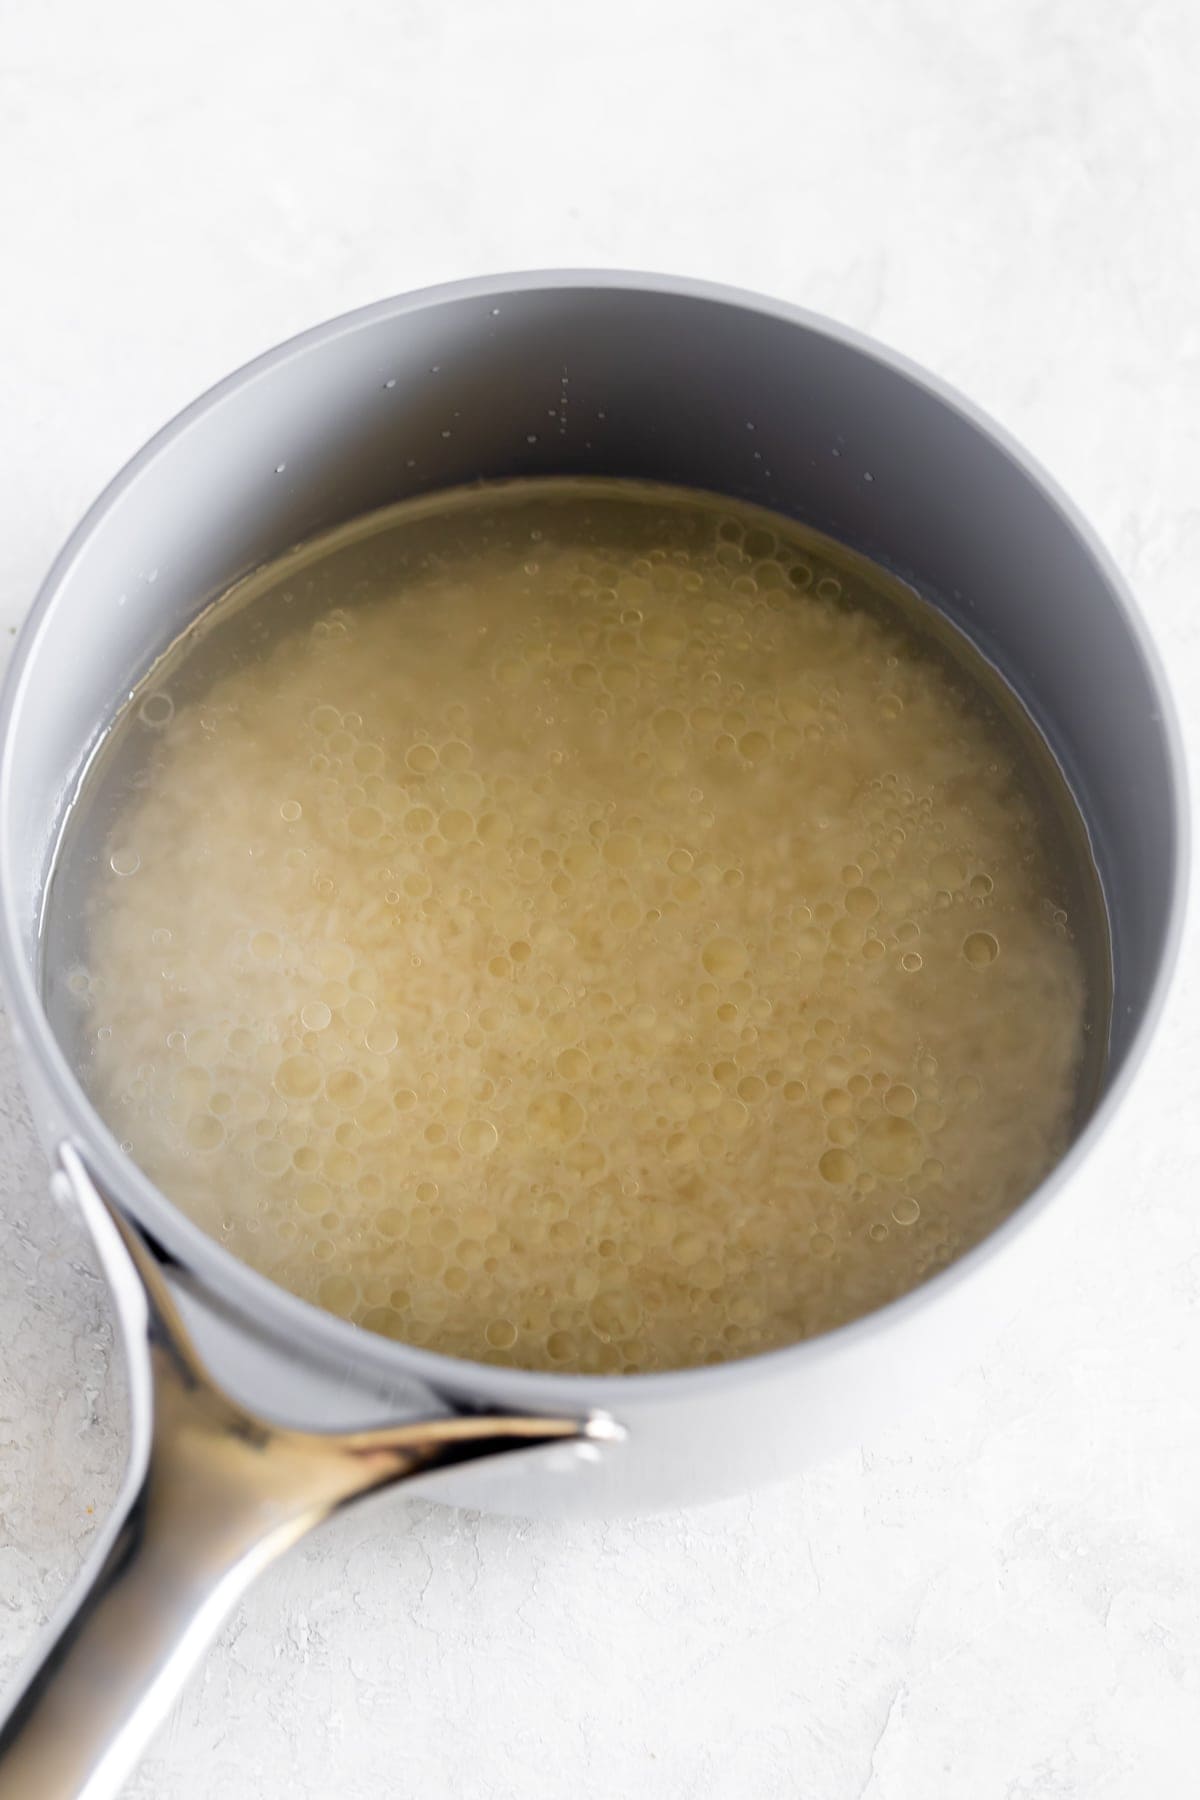 rice, oil, water, salt in saucepan before cooking